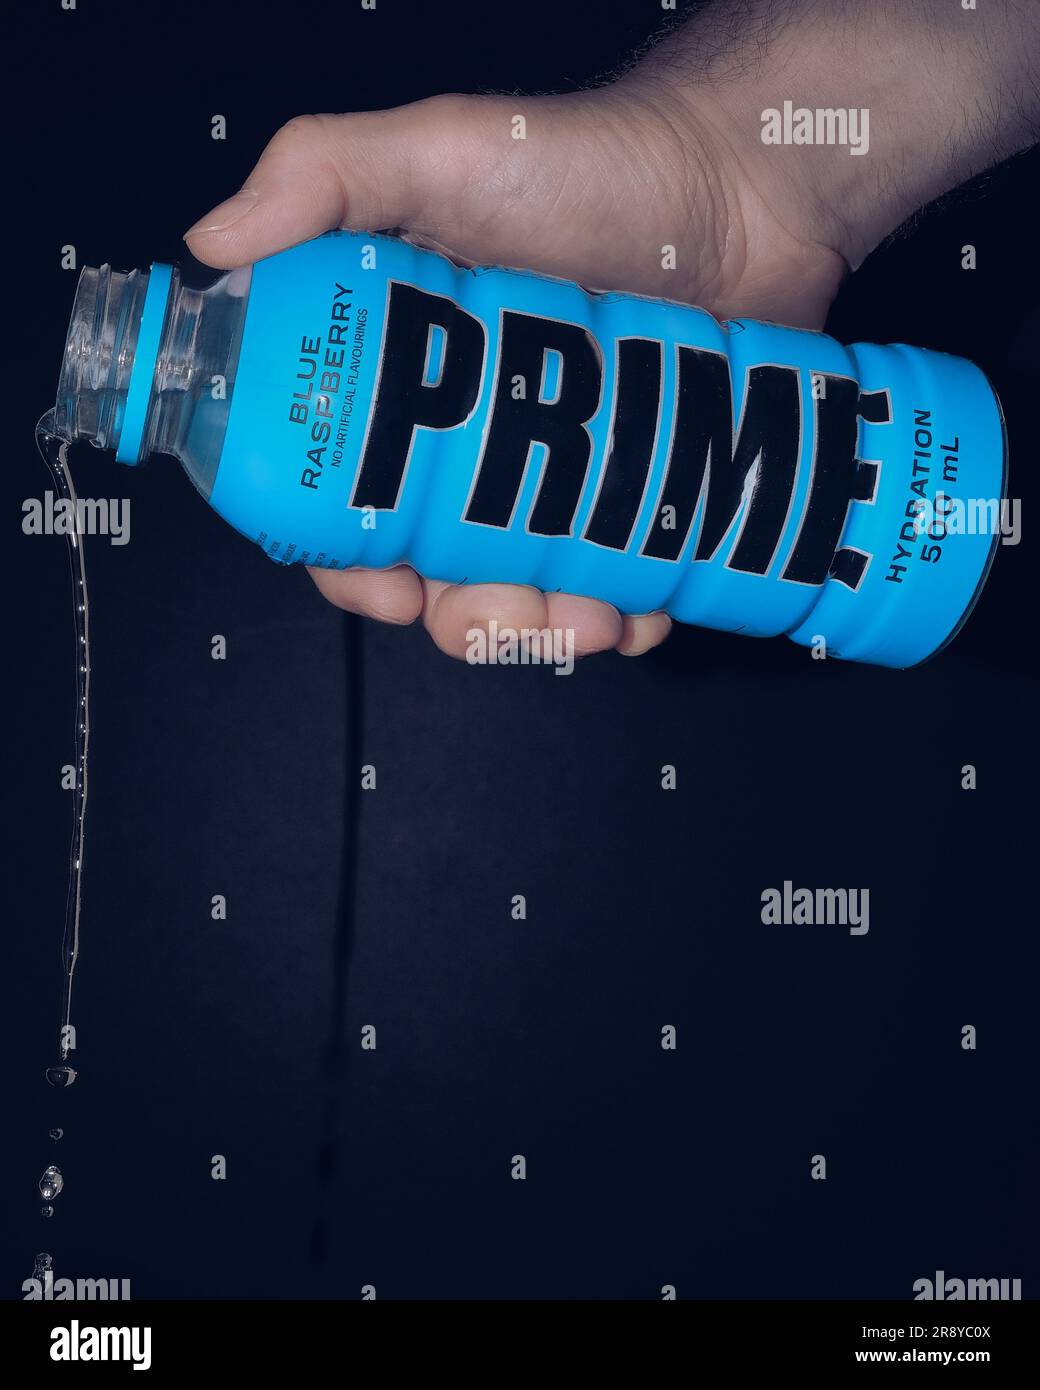 https://c8.alamy.com/comp/2R8YC0X/bottle-of-prime-hydration-energy-drink-blue-raspberry-popular-beverage-by-youtubers-ksi-and-logan-paul-2R8YC0X.jpg